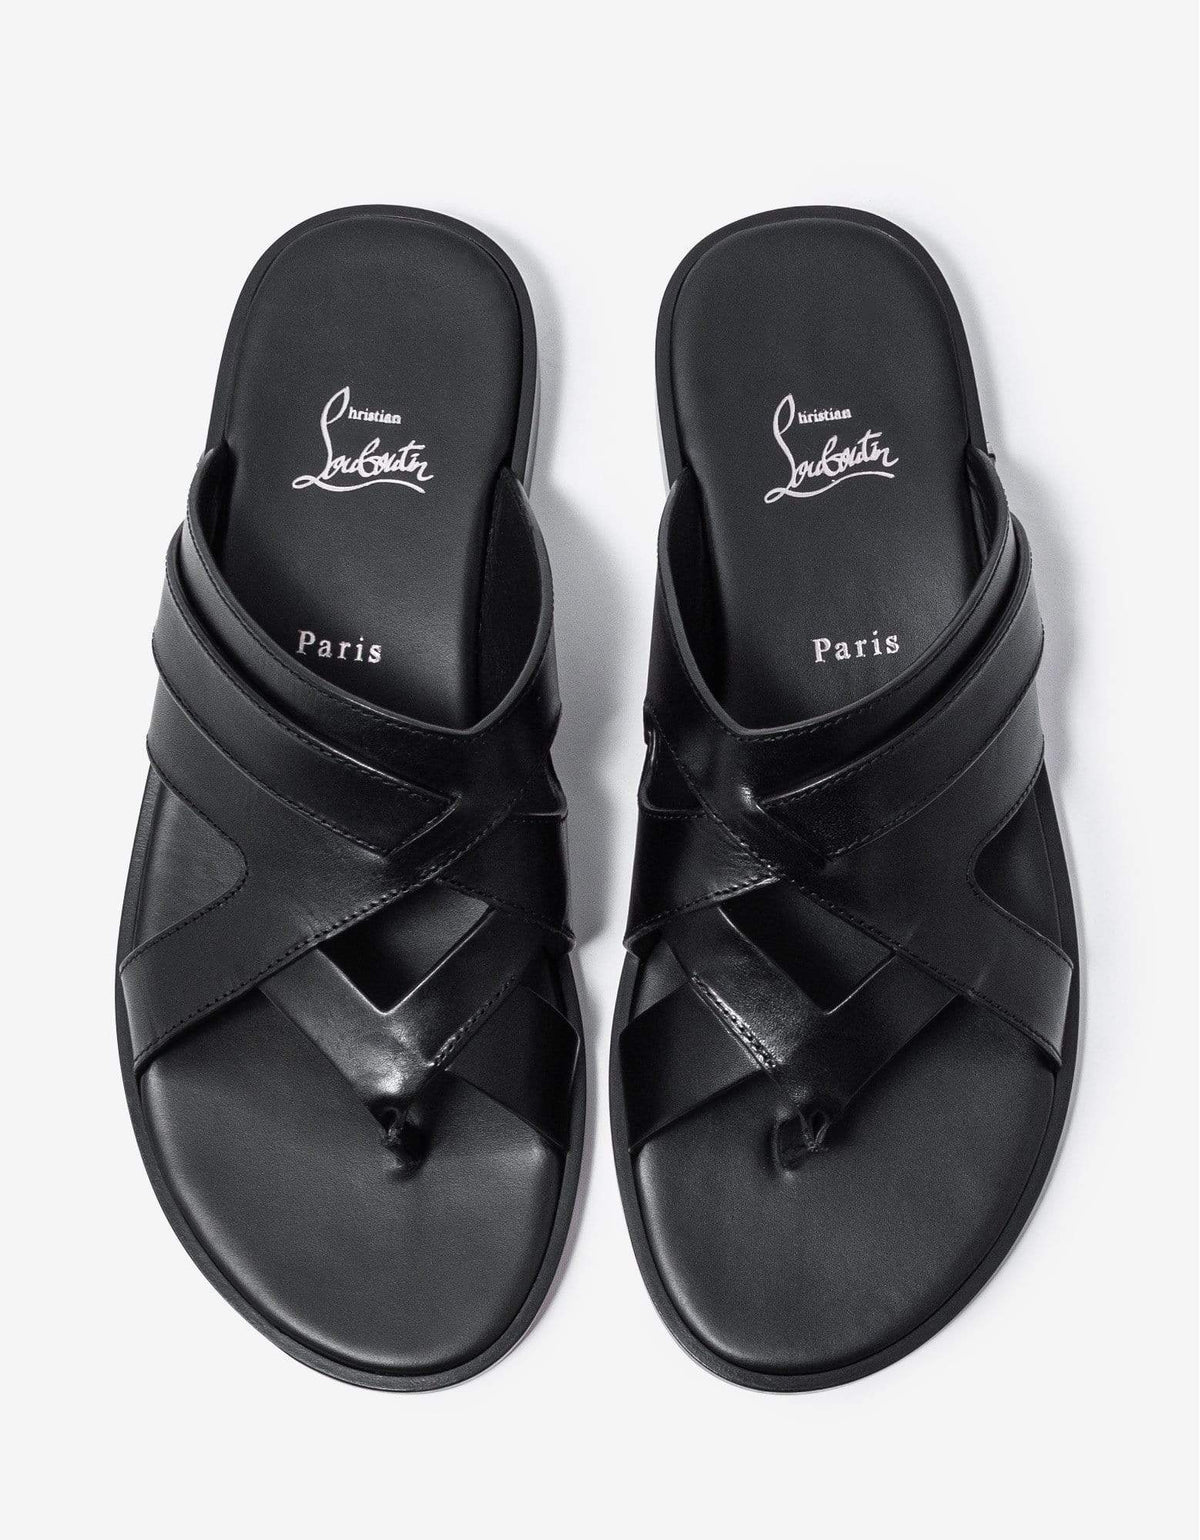 Christian Louboutin Sinouhe Black Leather Sandals